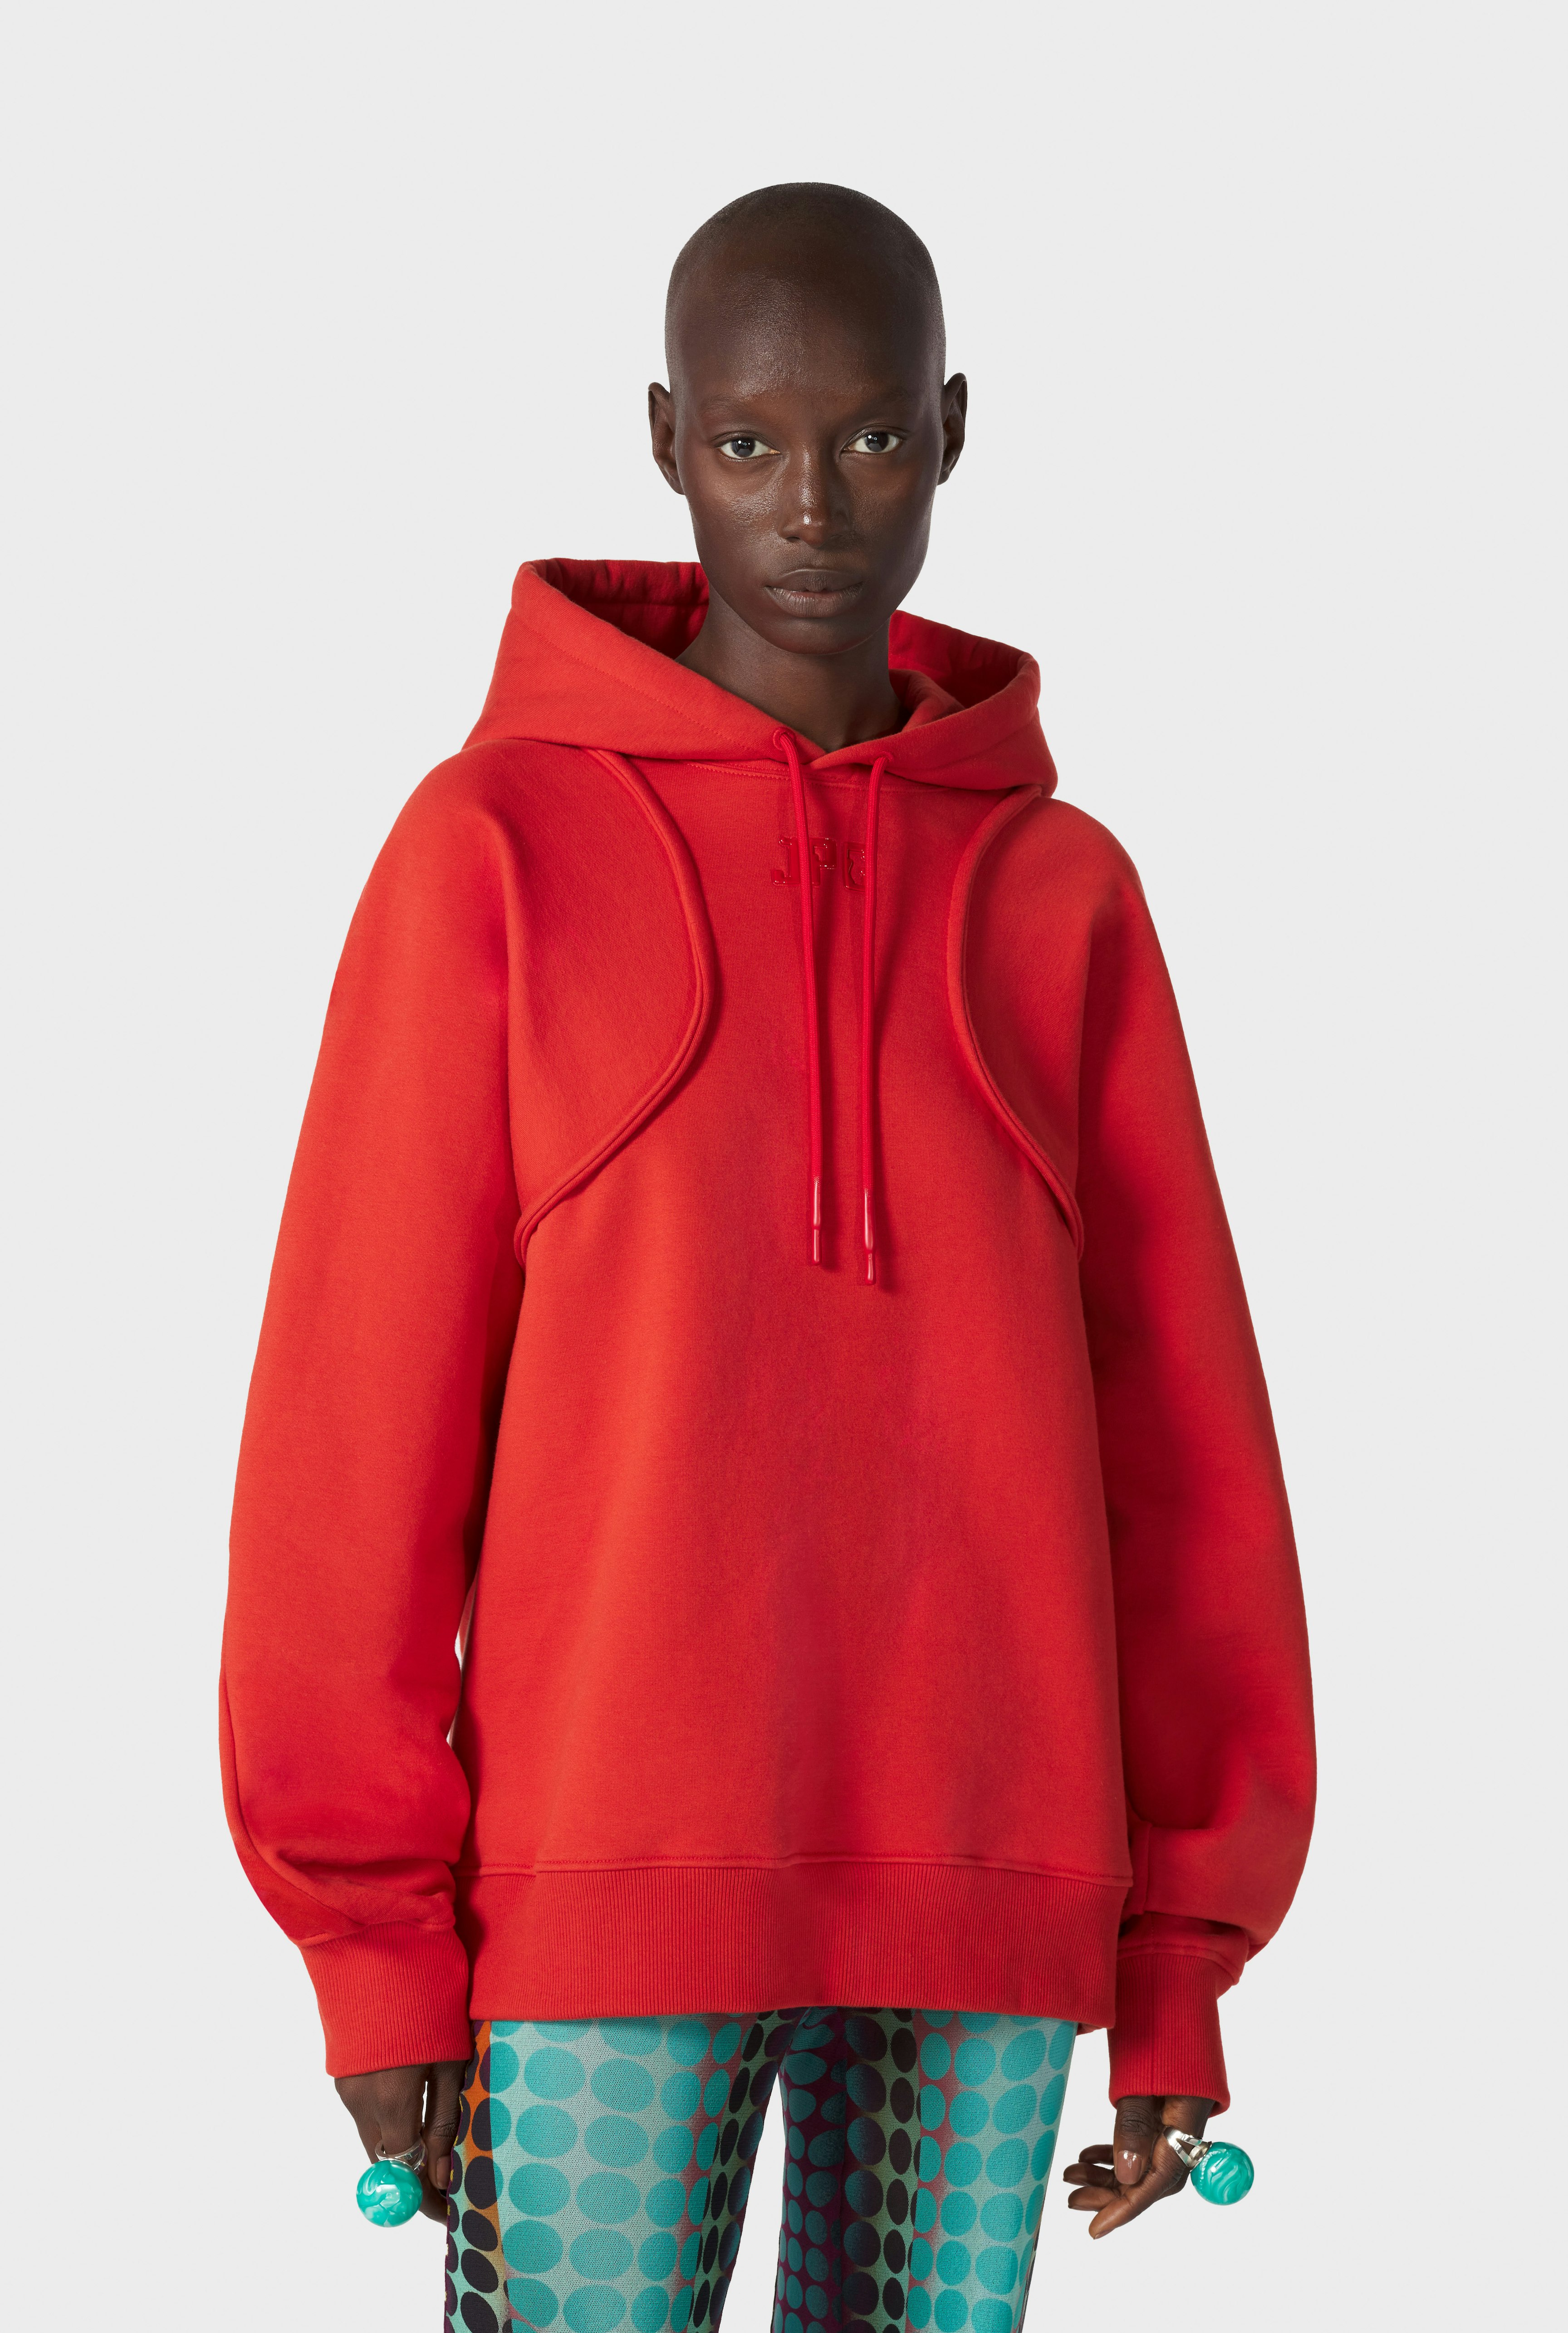 The Red JPG Sweatshirt